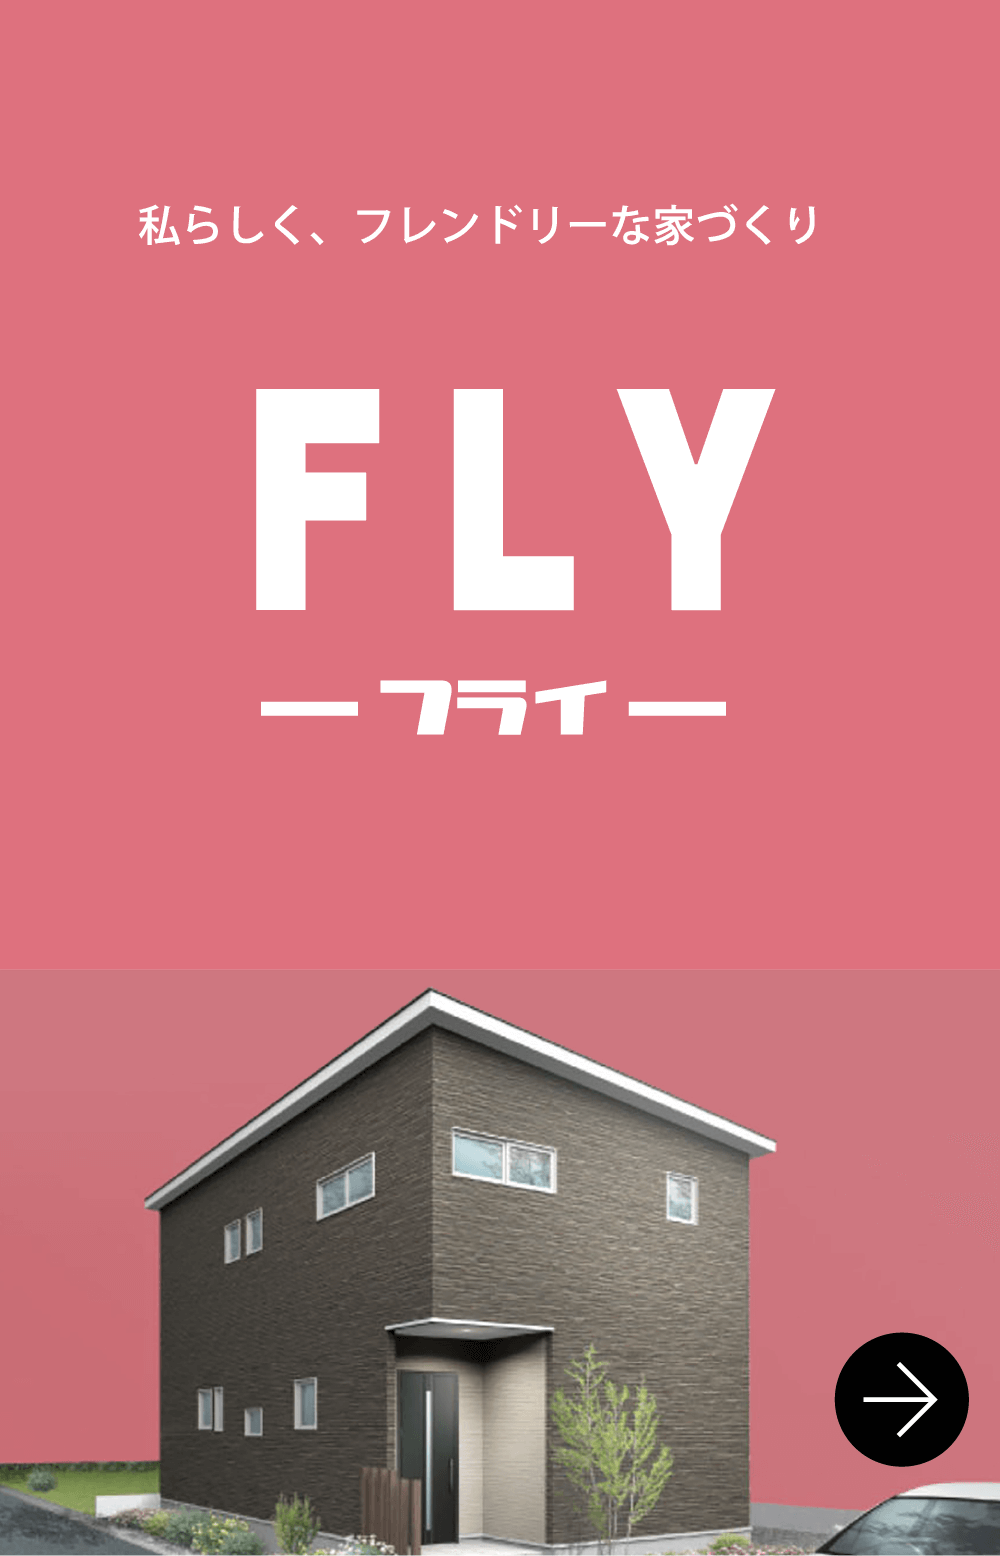 FLY -フライ-